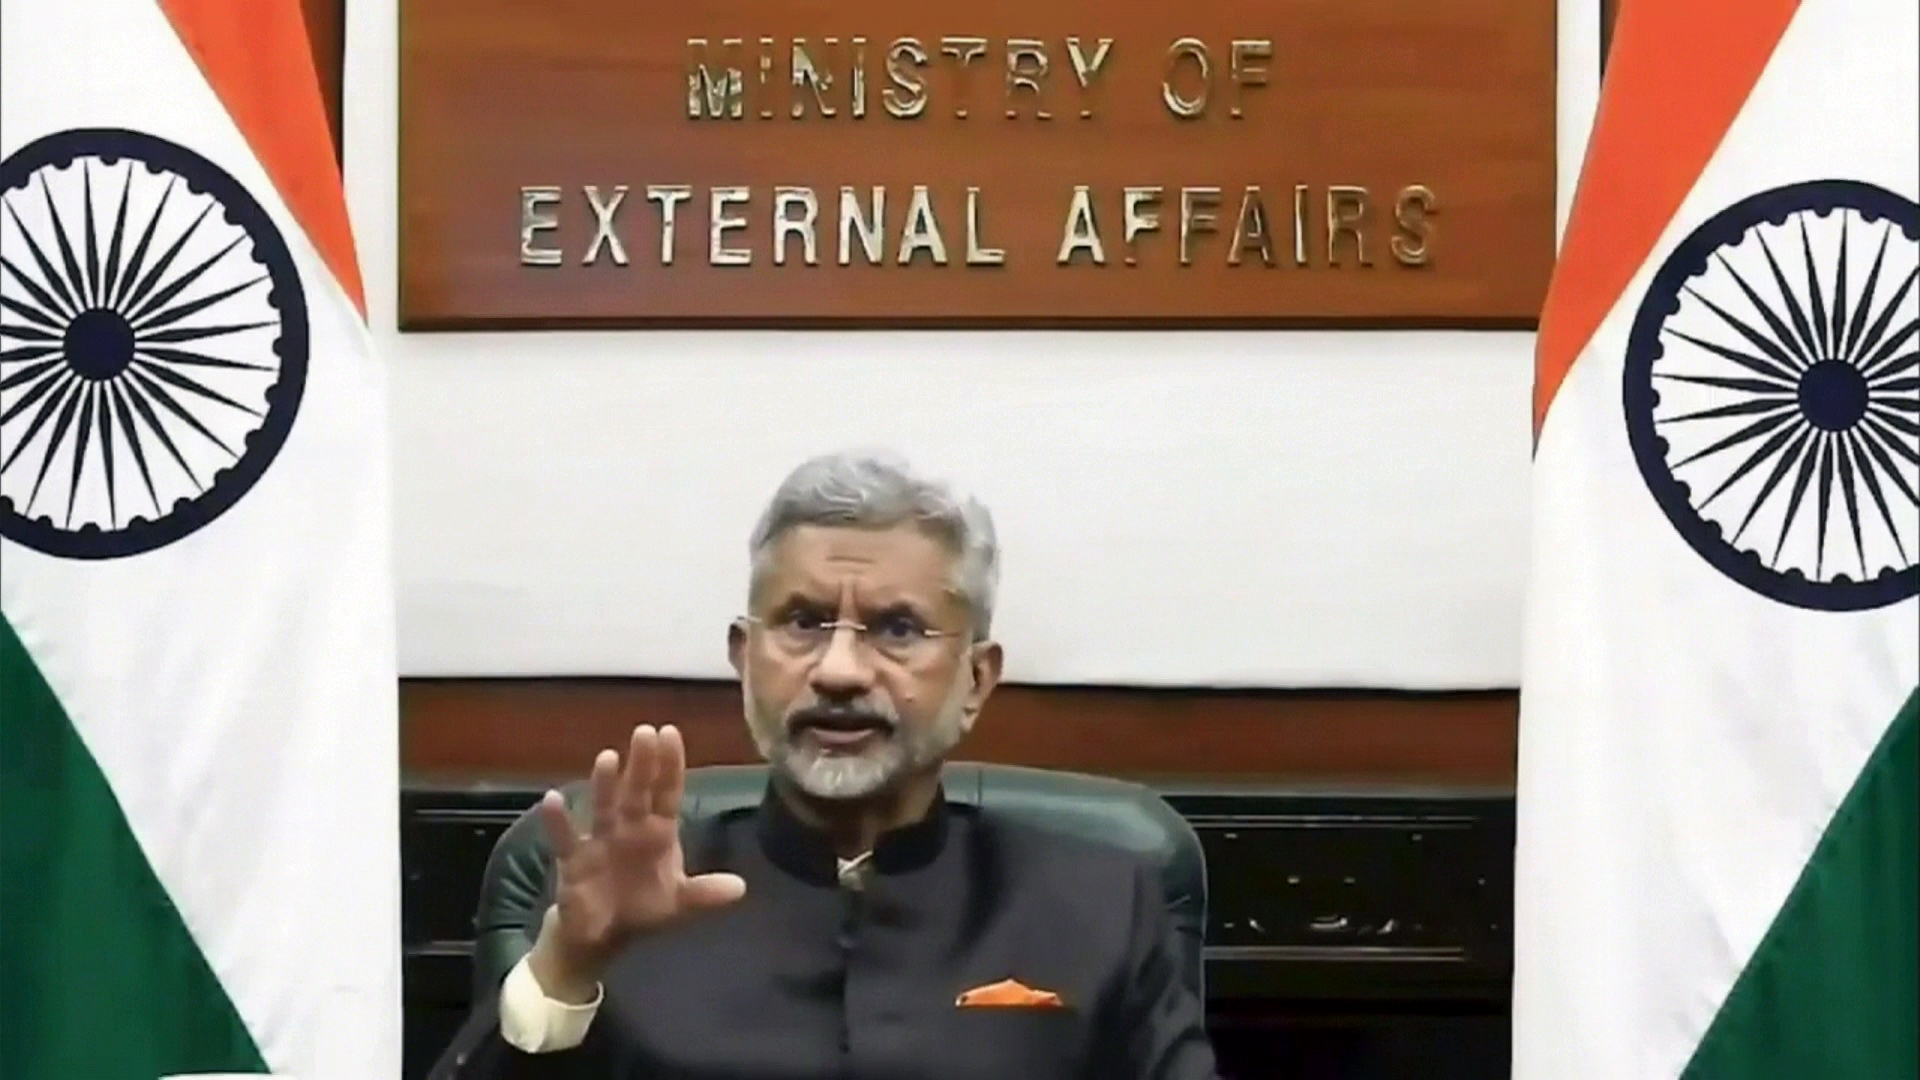 External Affairs Minister Dr S. Jaishankar